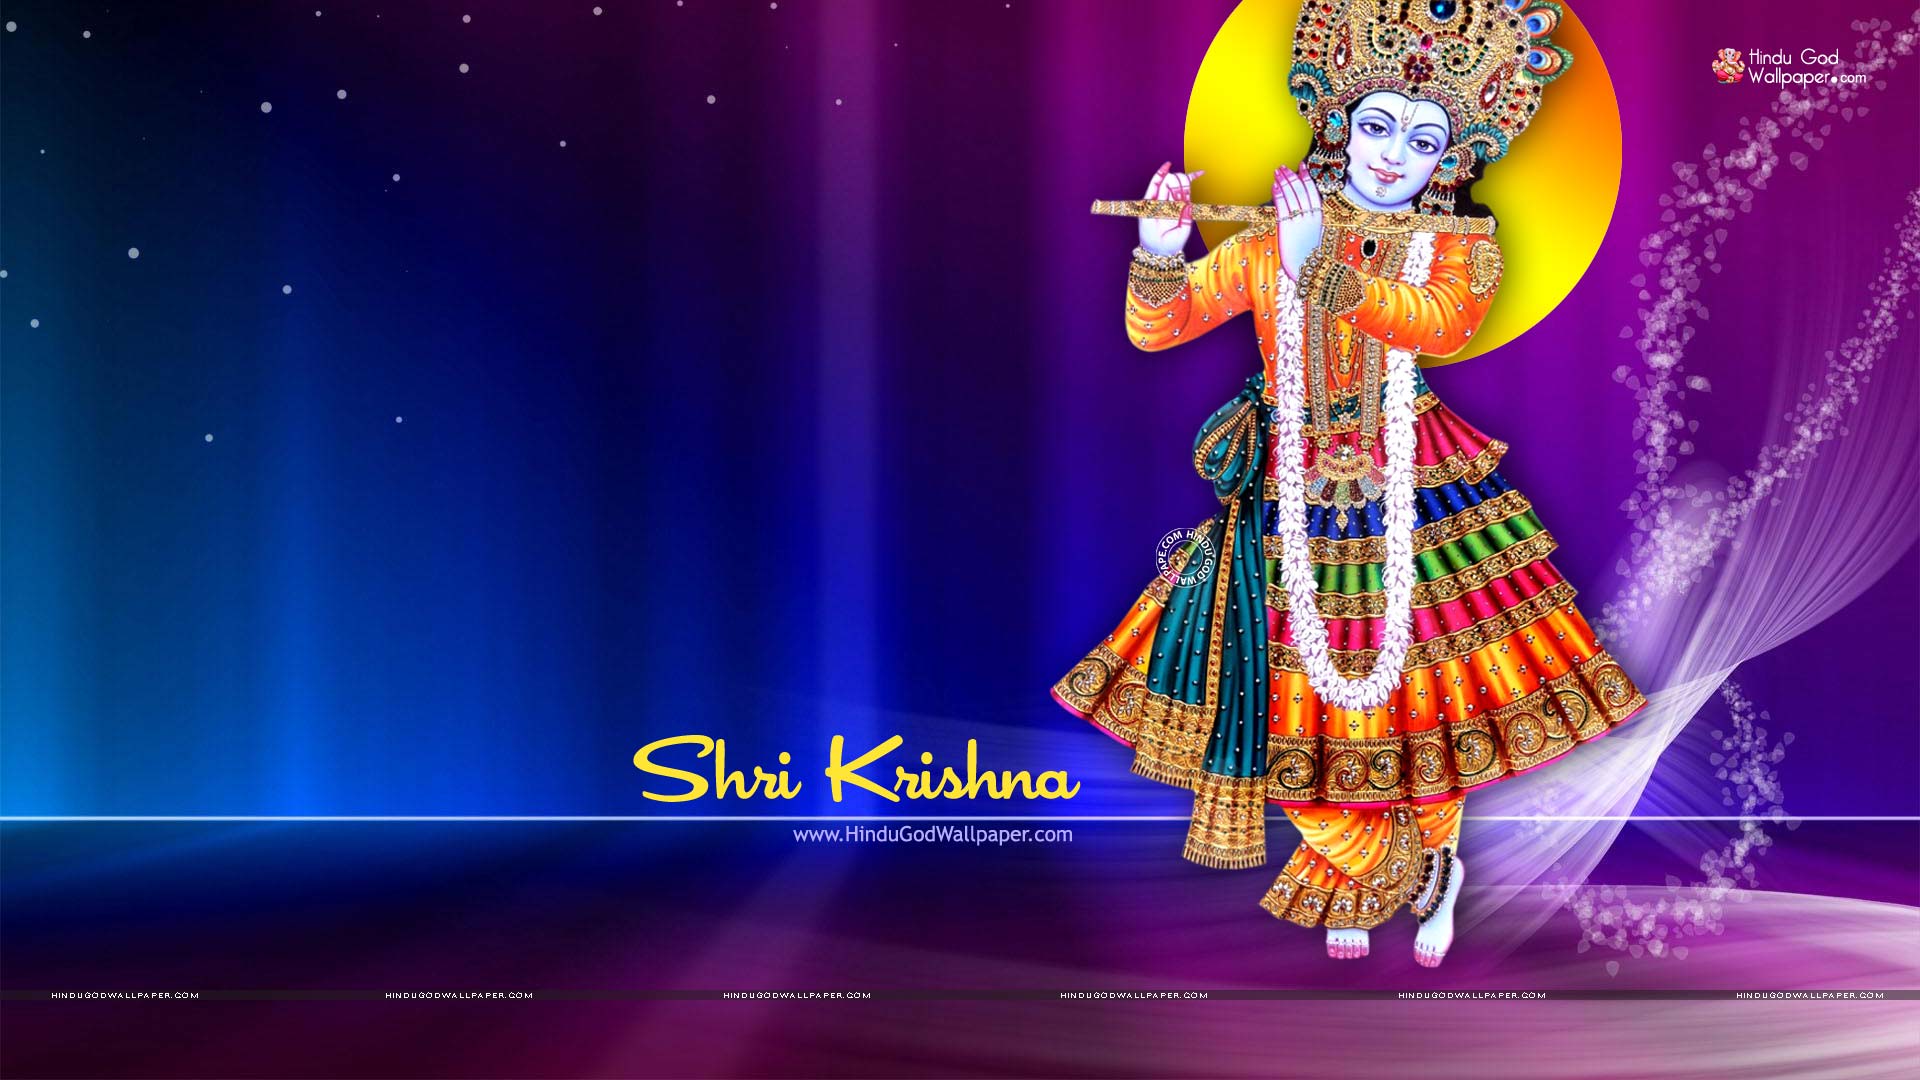 Krishna Wallpaper HD Full Size Image, Photos 1080p Free Download